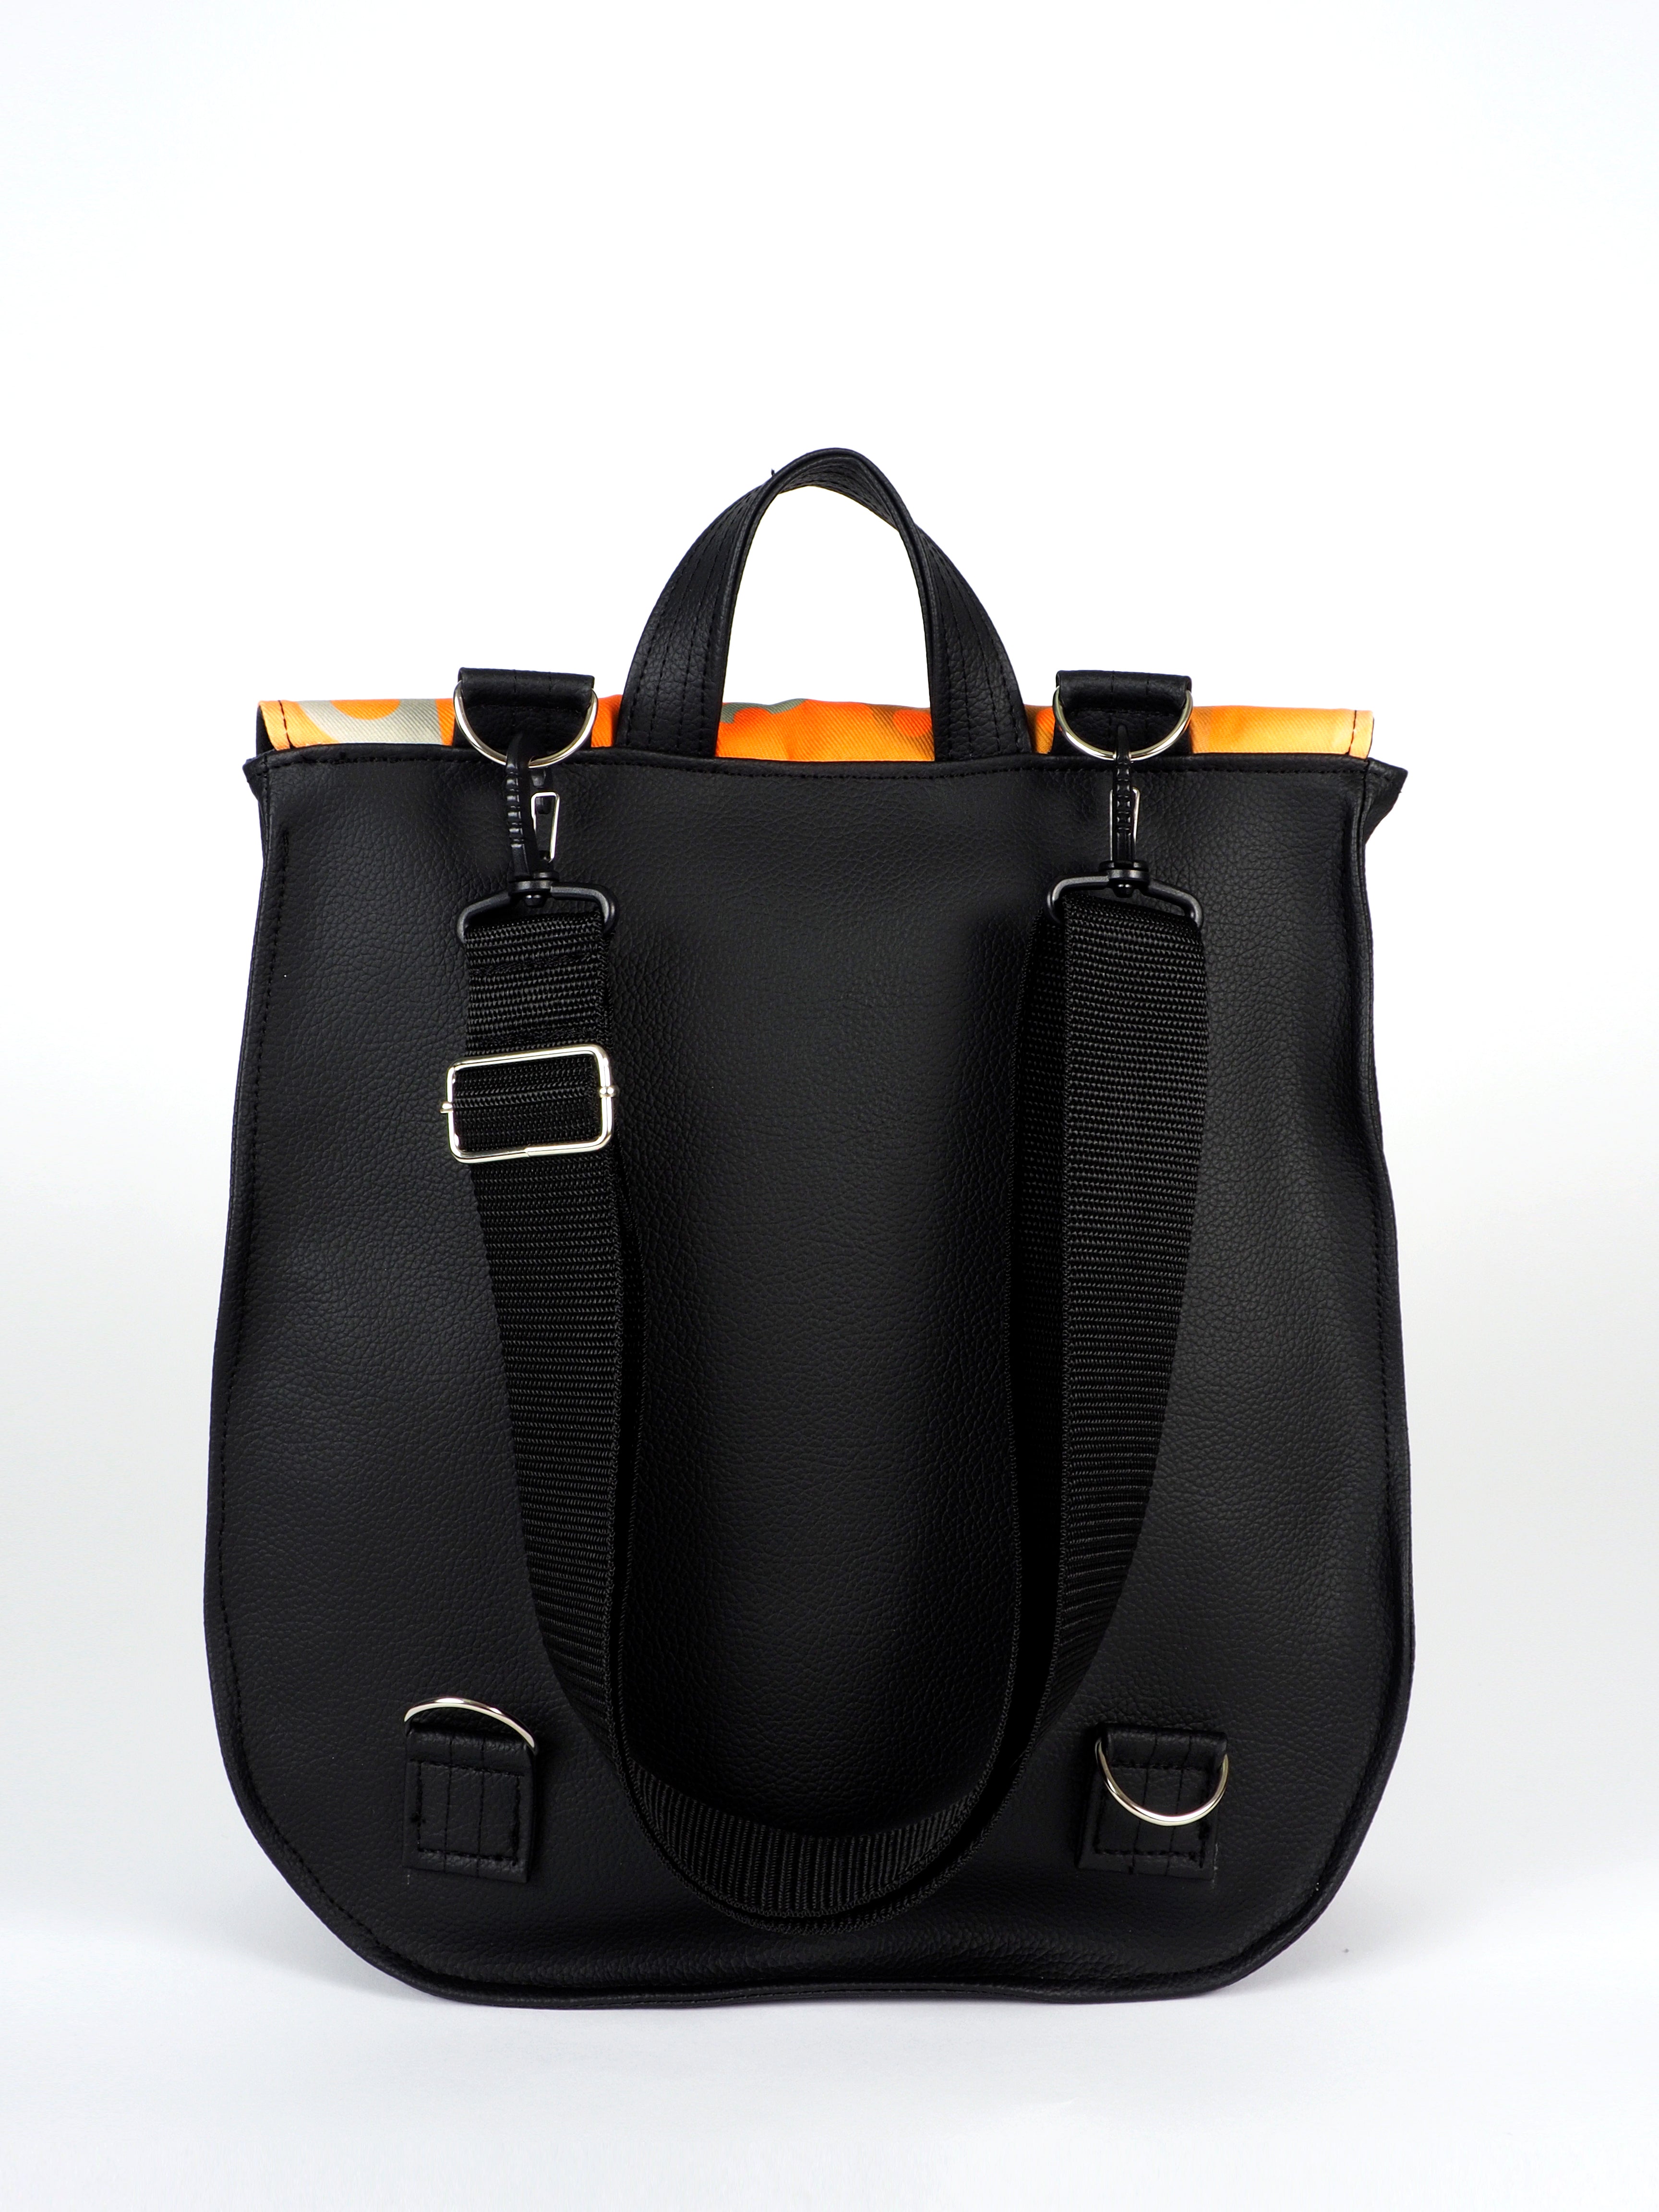 Bardo backpack&bag - Energy - Premium bardo backpack&bag from BARDO ART WORKS - Just lvart bag, backpack, bag, black, floral, flowers, gift, green, handemade, messenger, nature, red, urban style, vegan leather, woman75.00! Shop now at BARDO ART WORKS